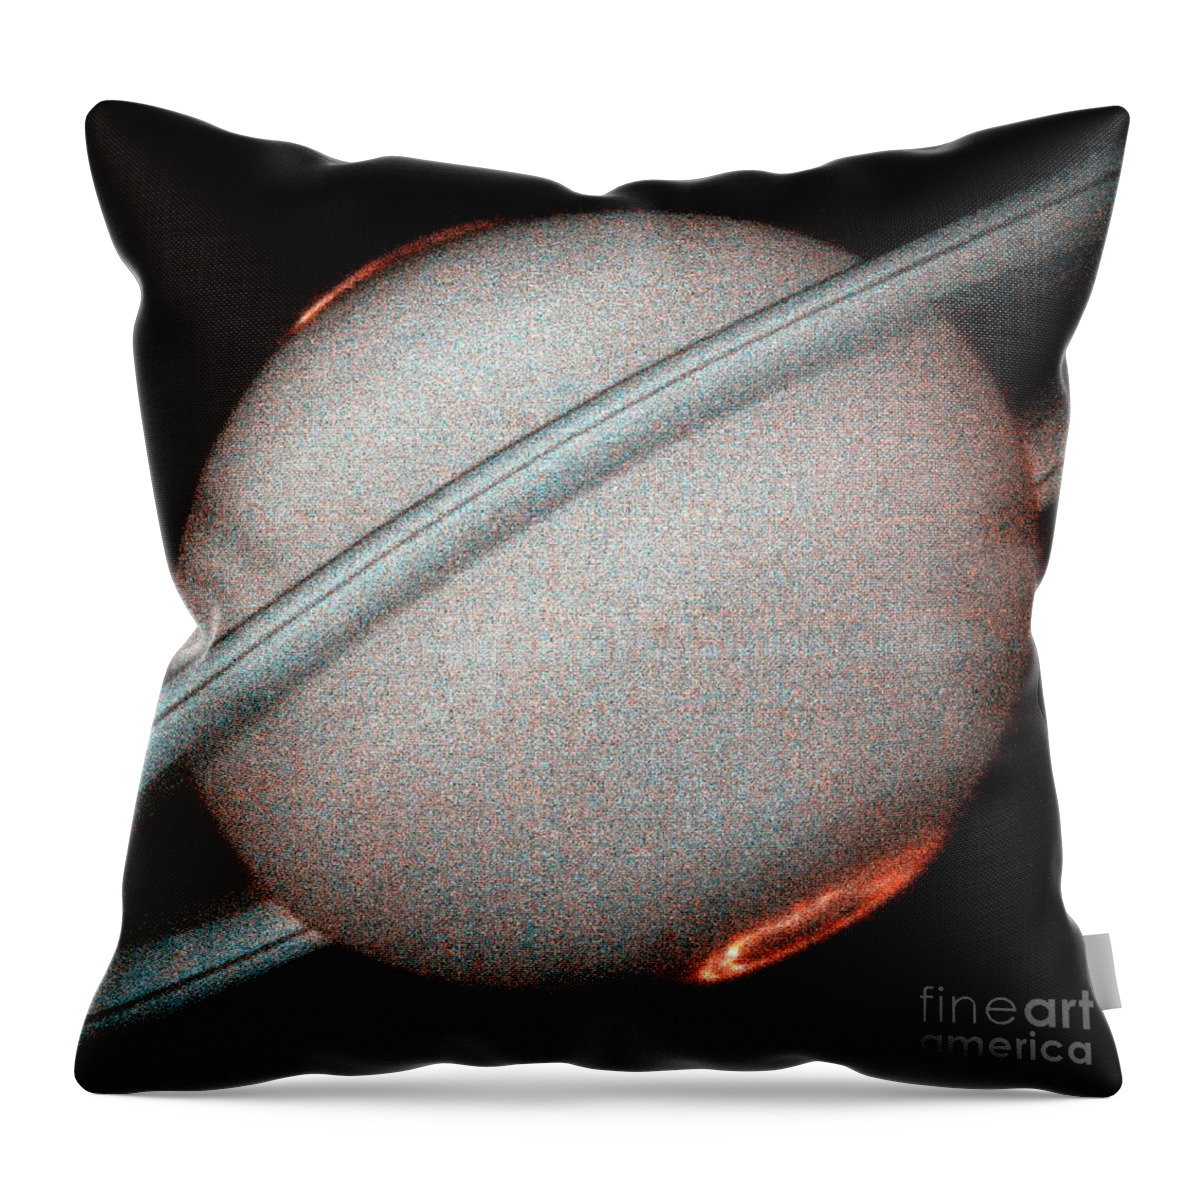 Saturn Throw Pillow featuring the photograph Saturns Auroras by Nasa